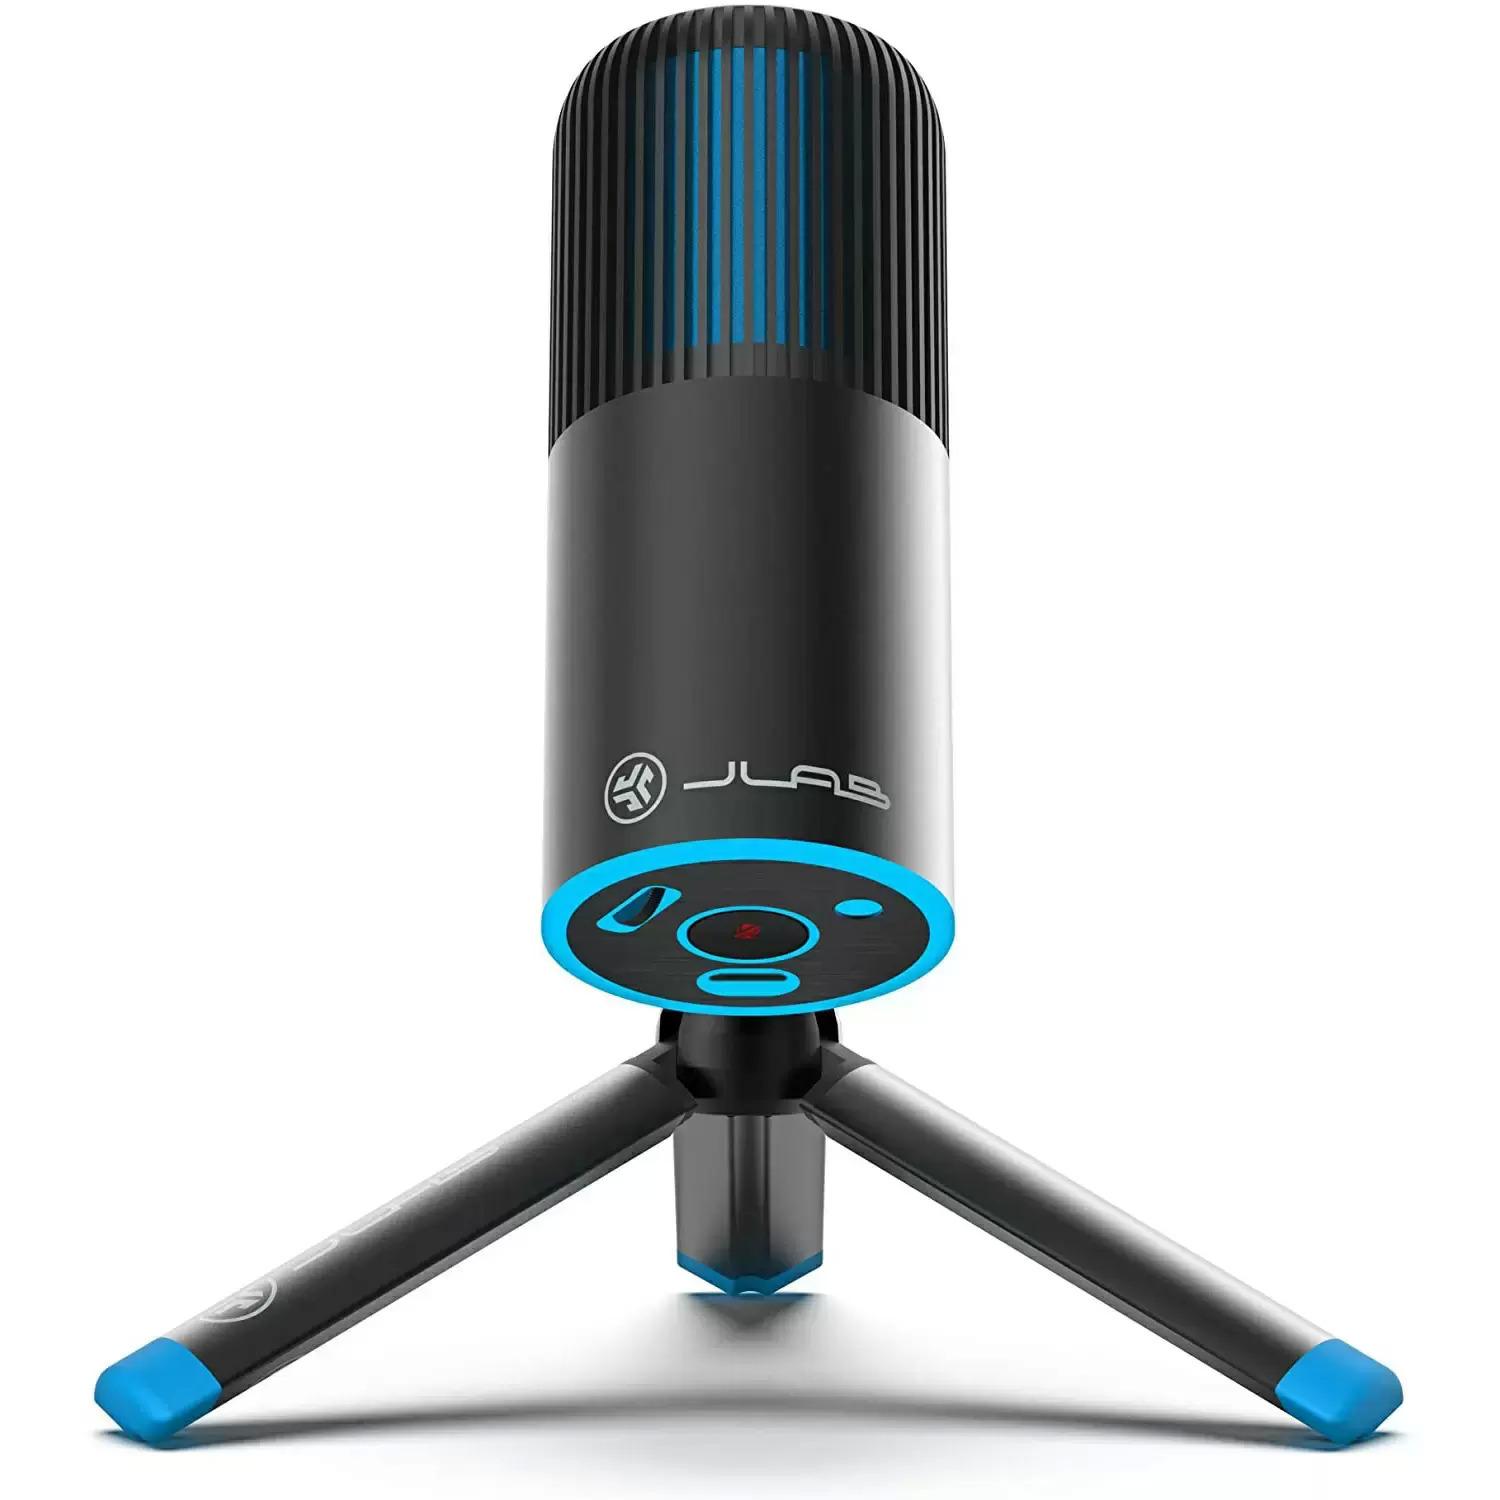 JLab Audio Talk Go USB Microphone for $16.99